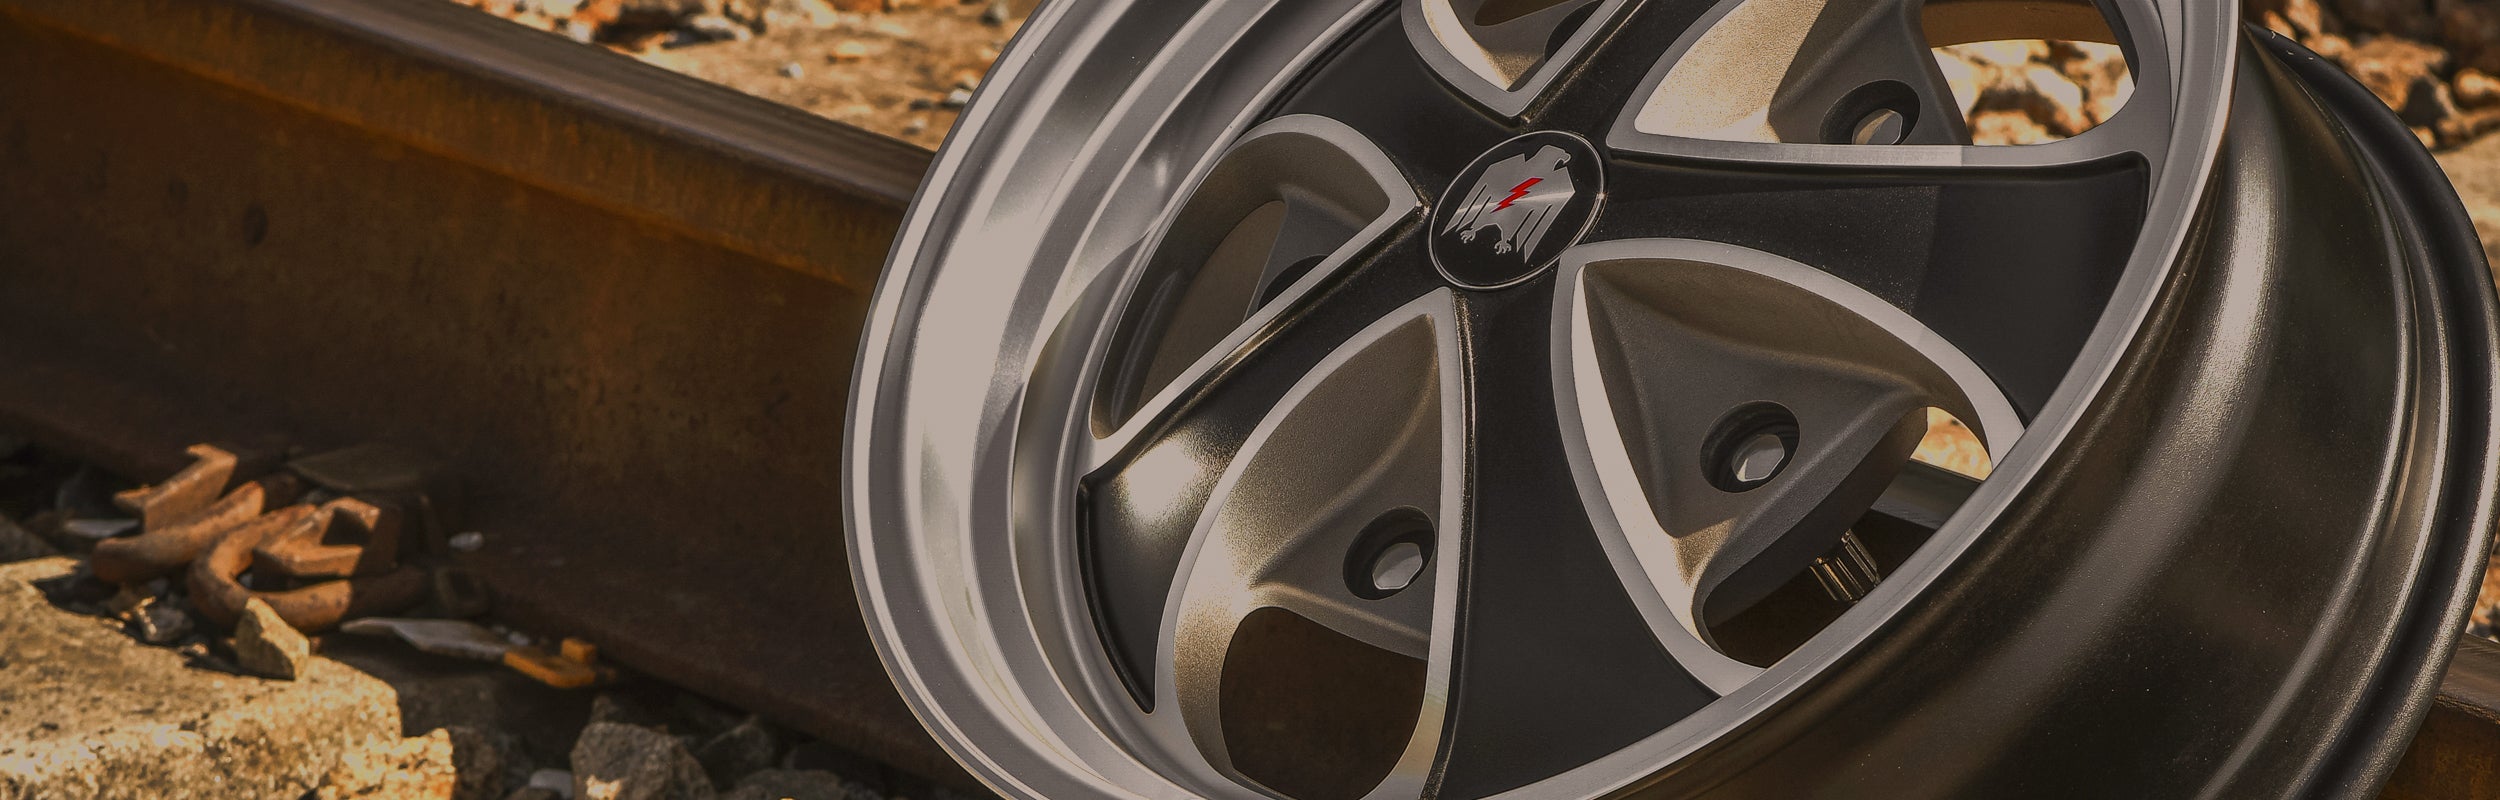 klassik rader wheels kr falcon wheel satib black with retro gray finish railroad tracks